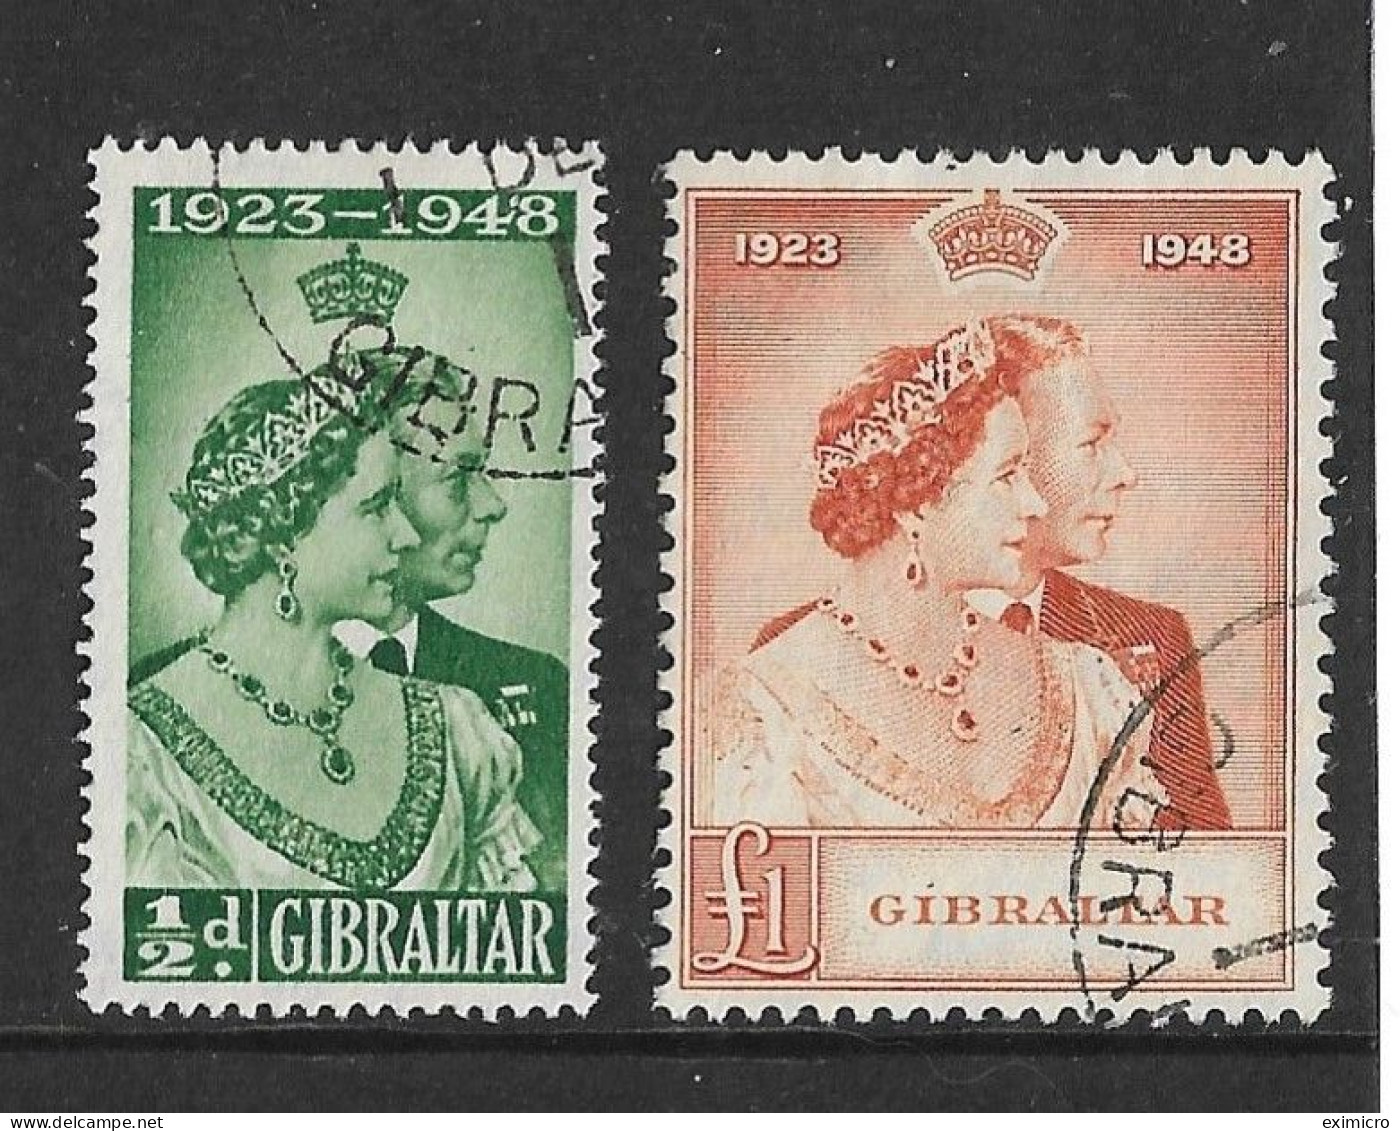 GIBRALTAR 1948 SILVER WEDDING SET FINE USED Cat £83 - Gibraltar